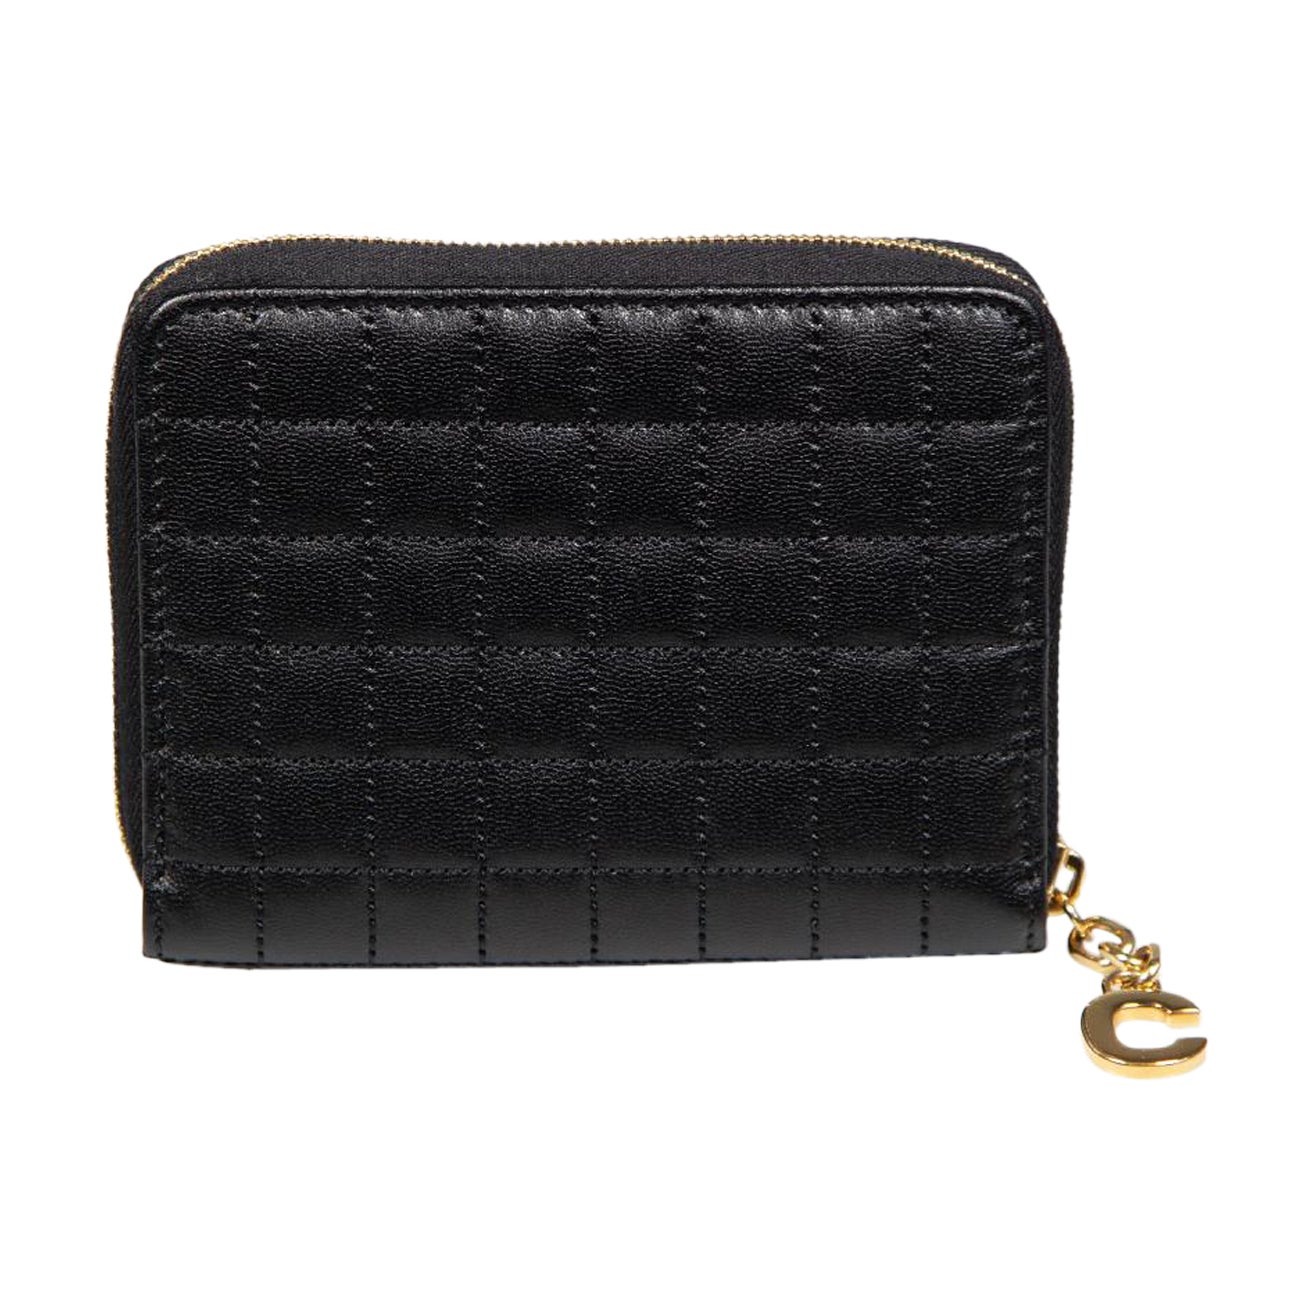 Céline Black Leather C Charm Quilted Wallet